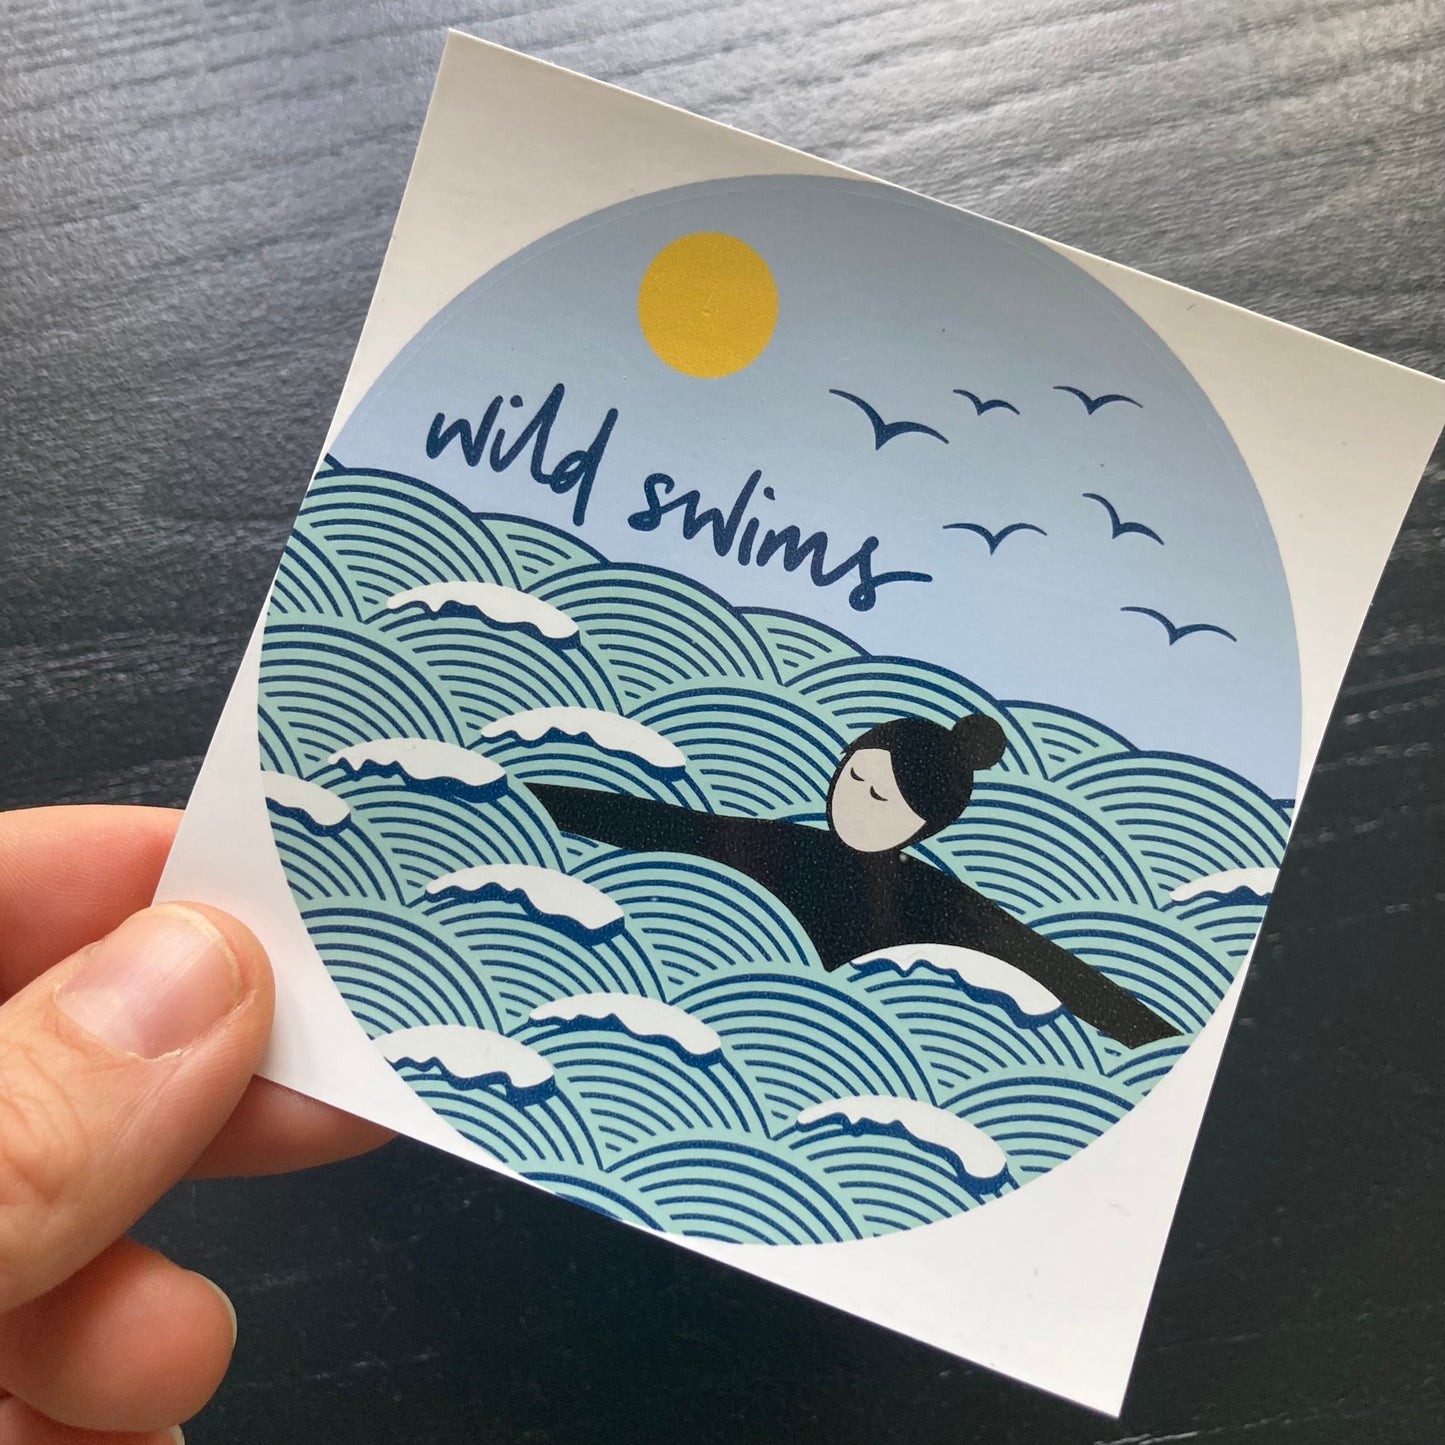 Wild swims self cling window sticker